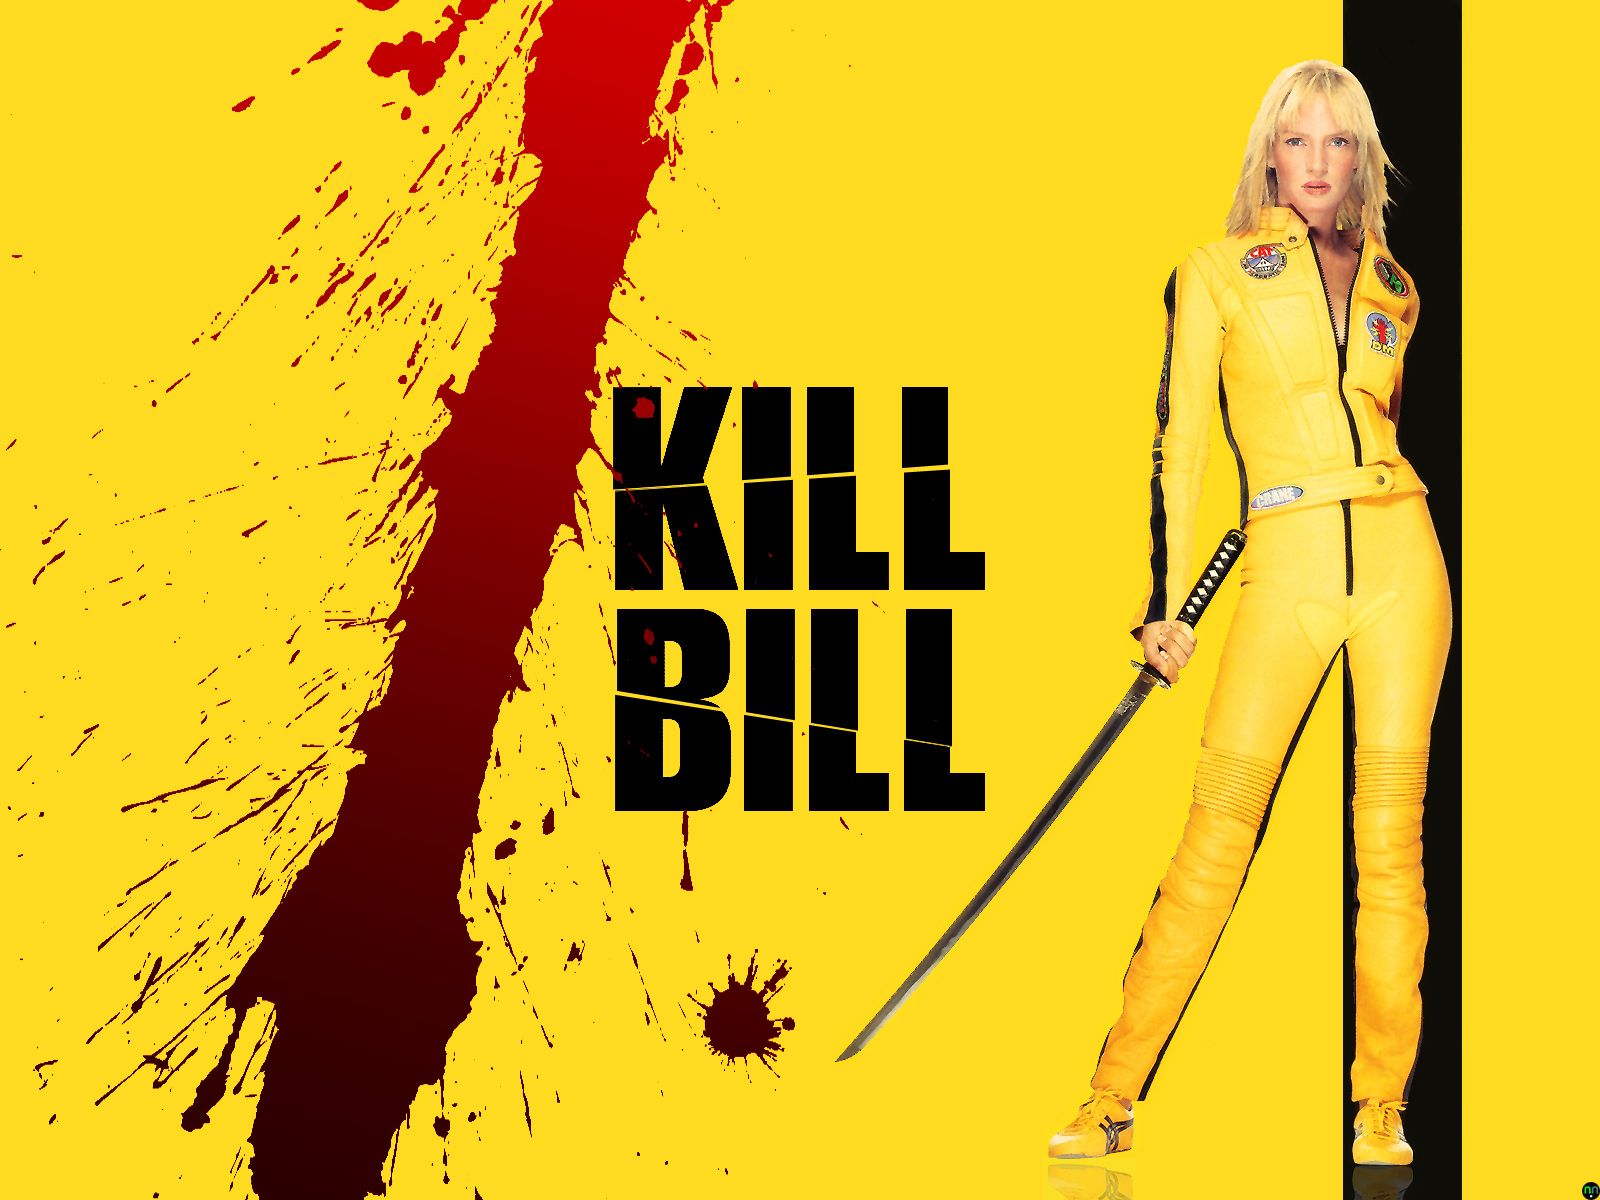 Kill Bill Pics, Anime Collection